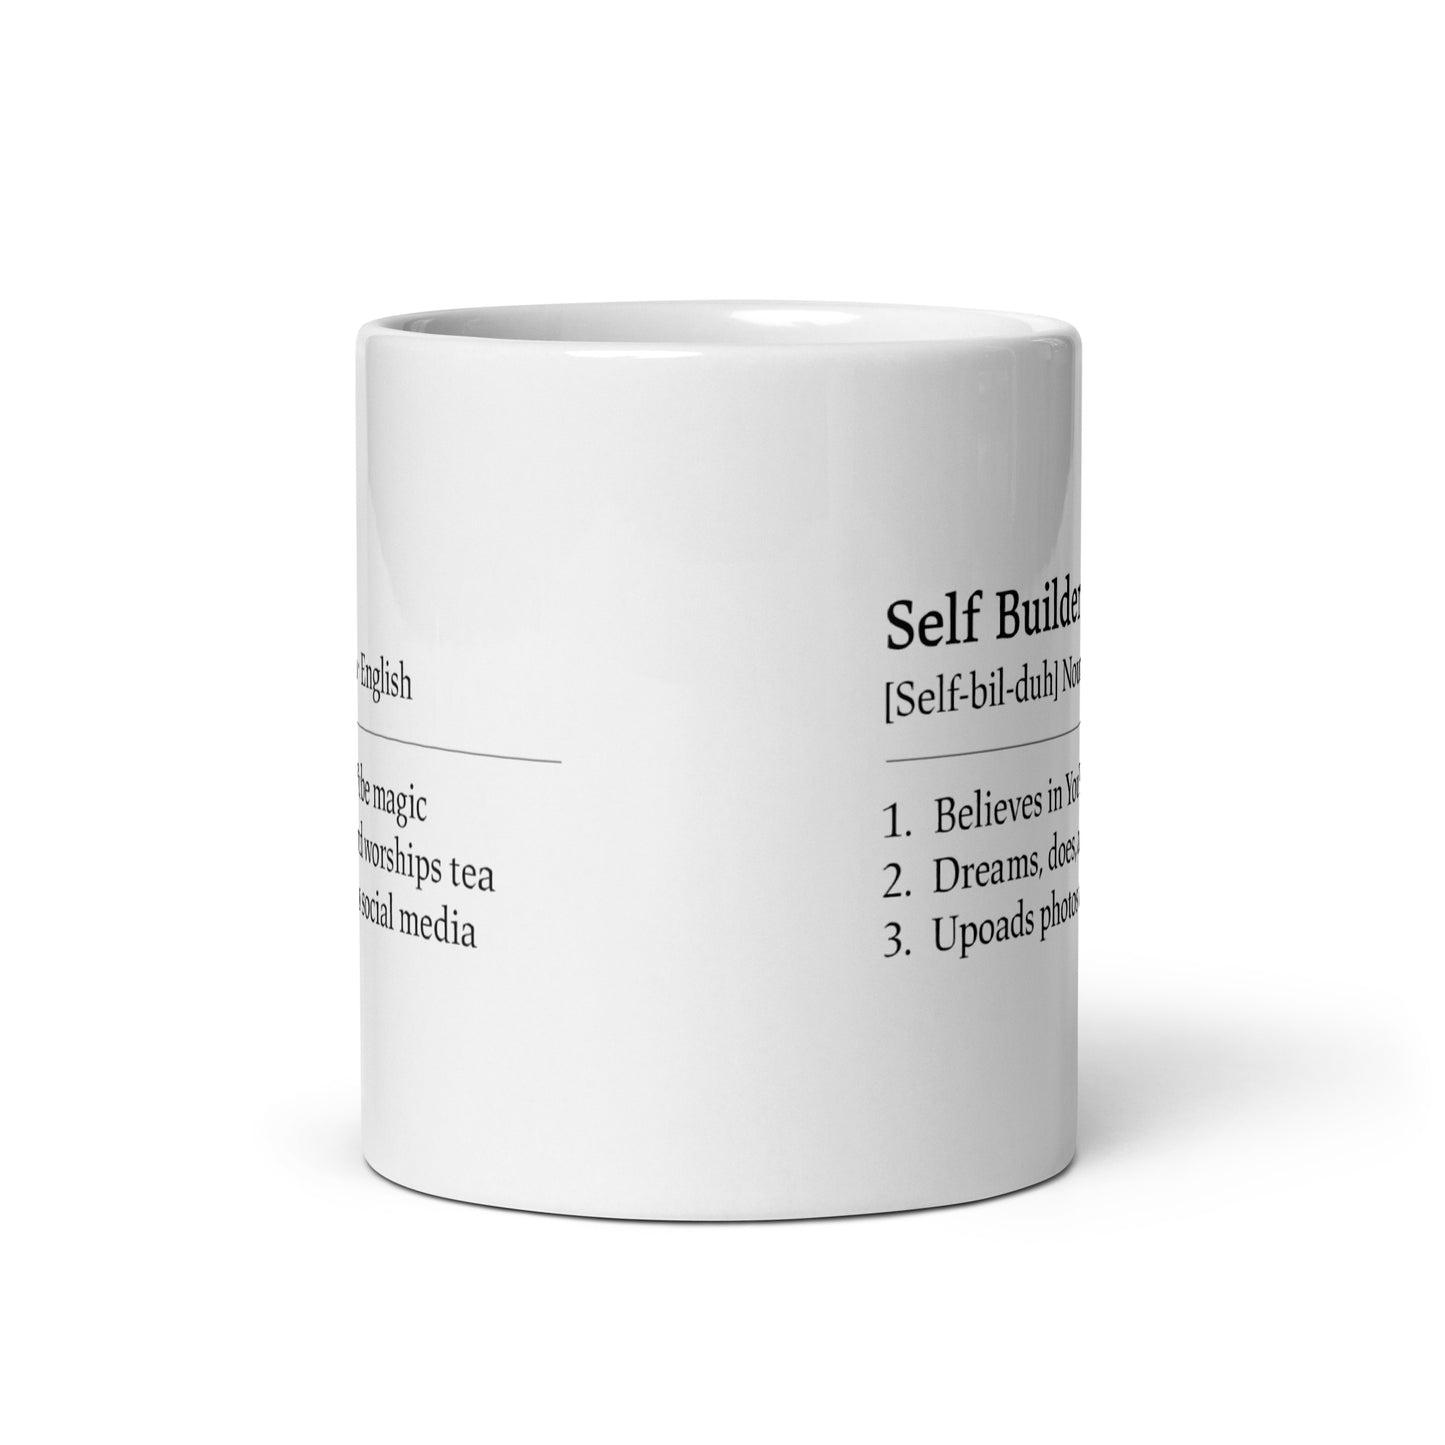 Define a Self Builder? - Informative 11oz Mug - Perfect Gift for DIY Enthusiasts